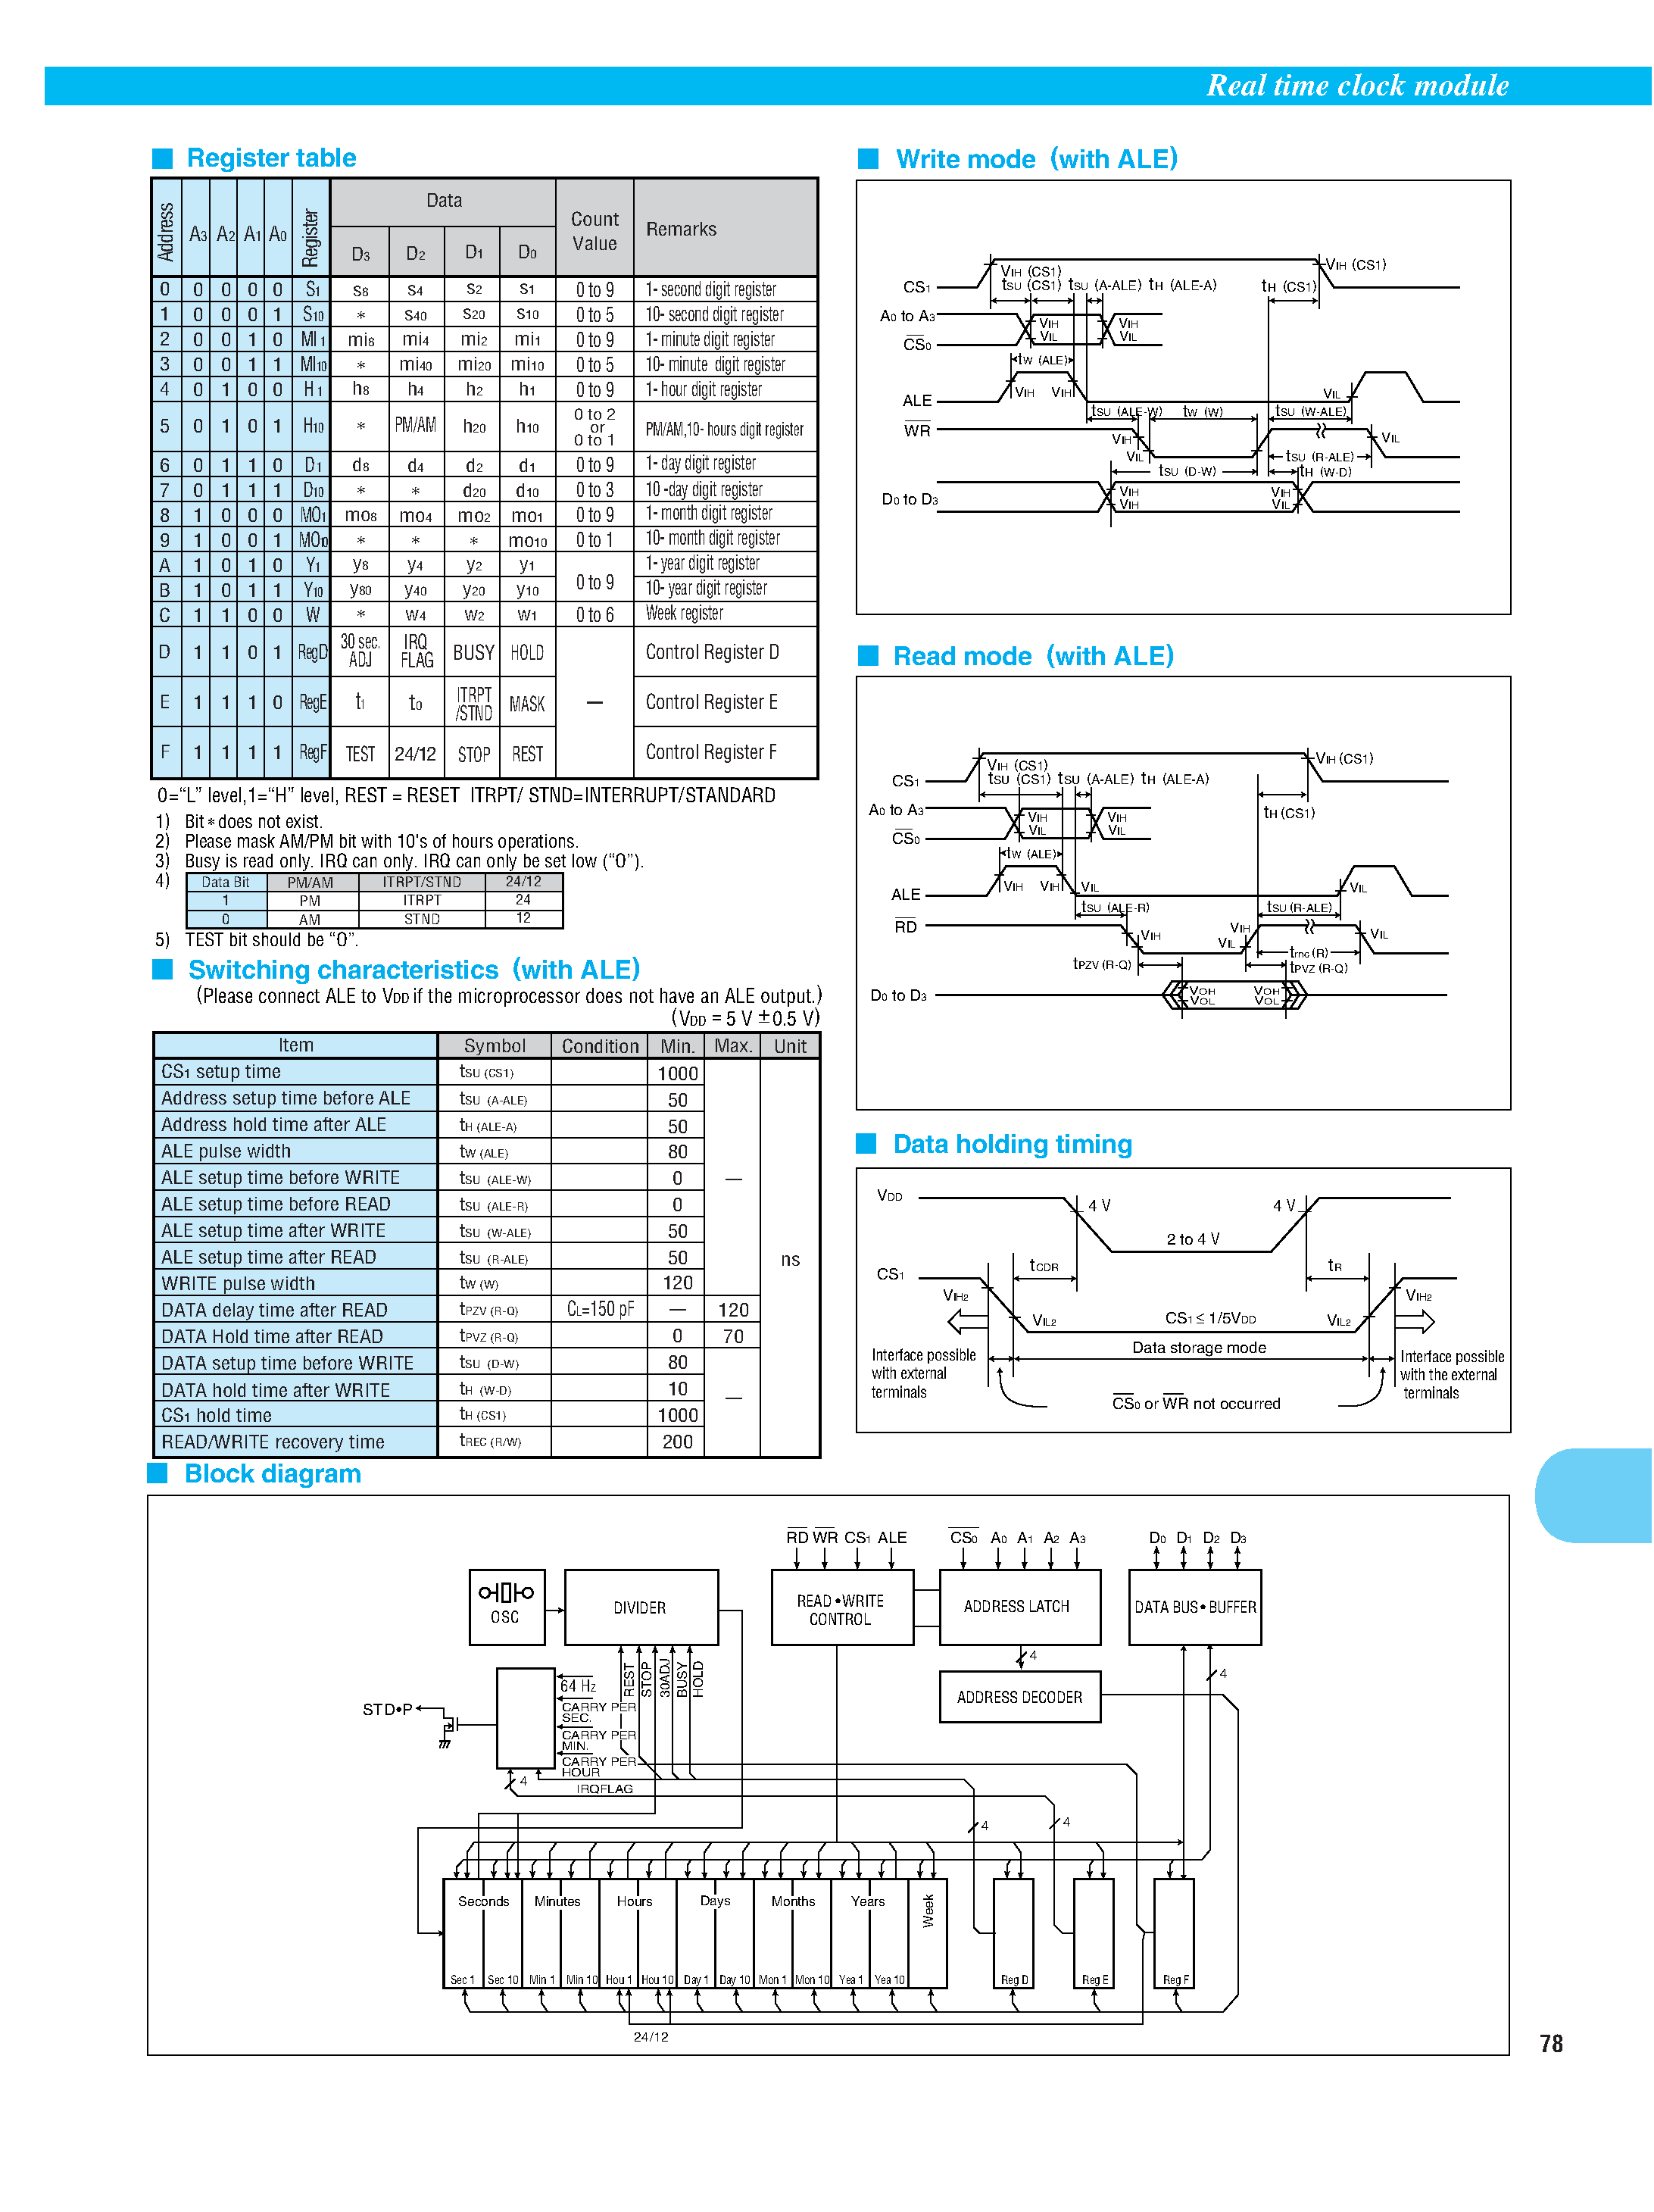 Datasheet RTC-72423 - Real time clock module(4-bit REAL TIME CLOCK MODULE) page 2